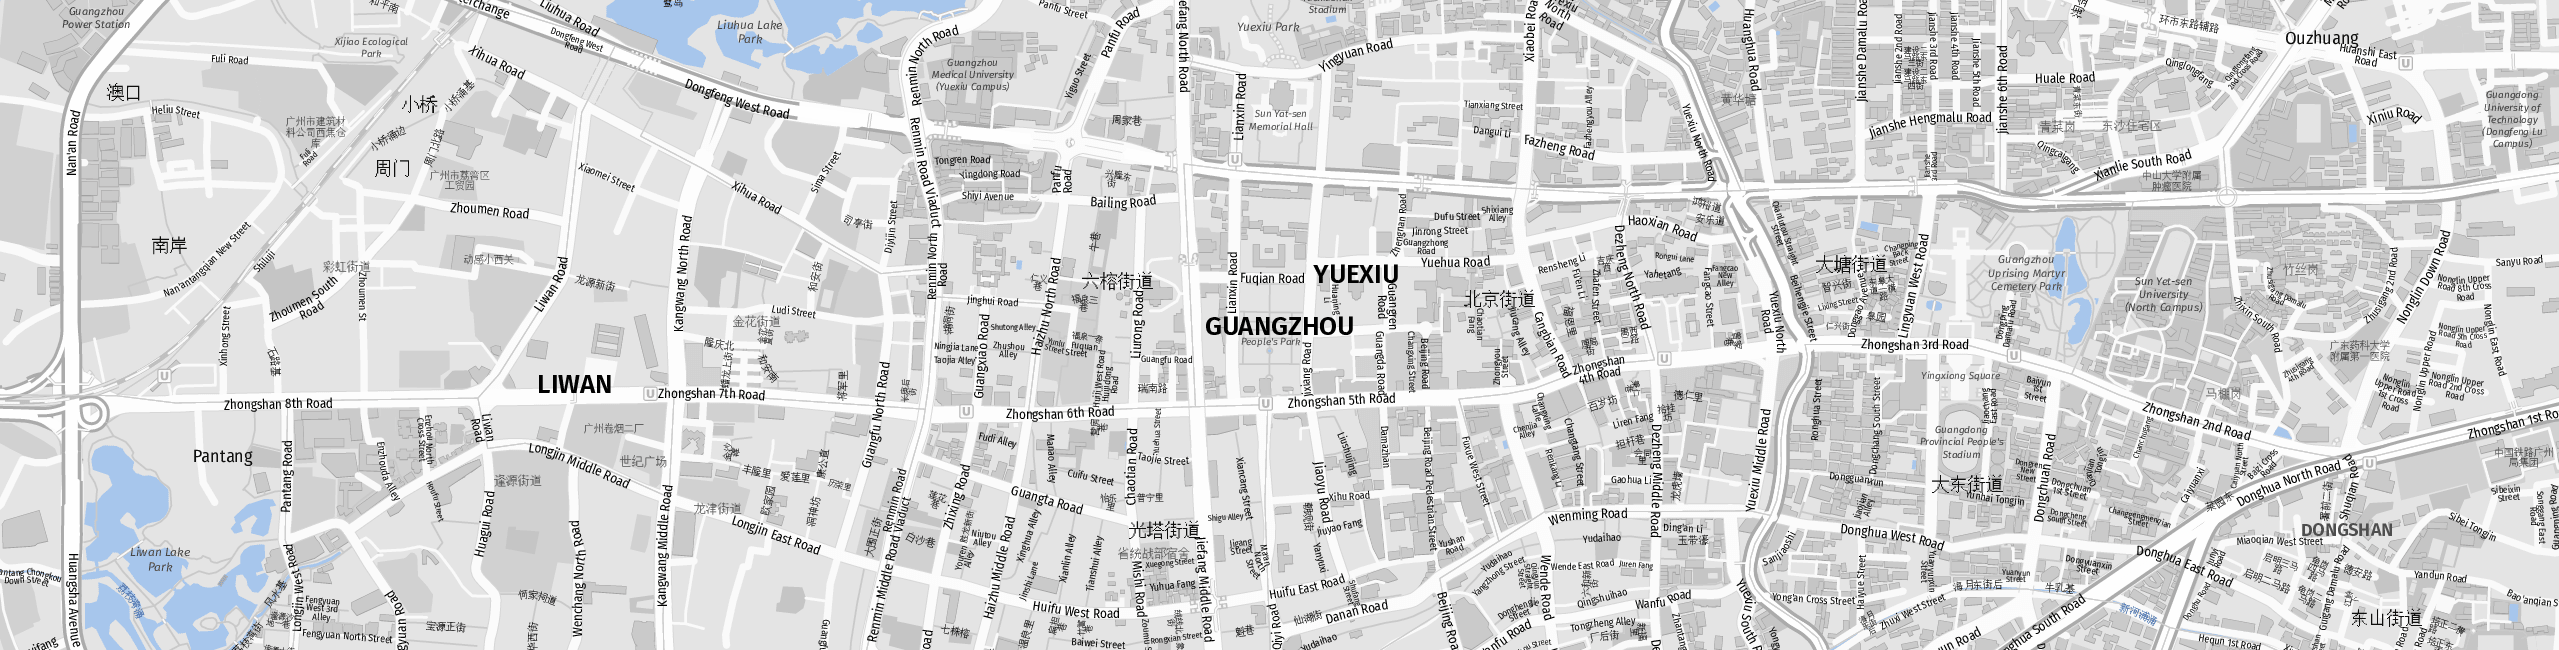 Stadtplan Guangzhou zum Downloaden.